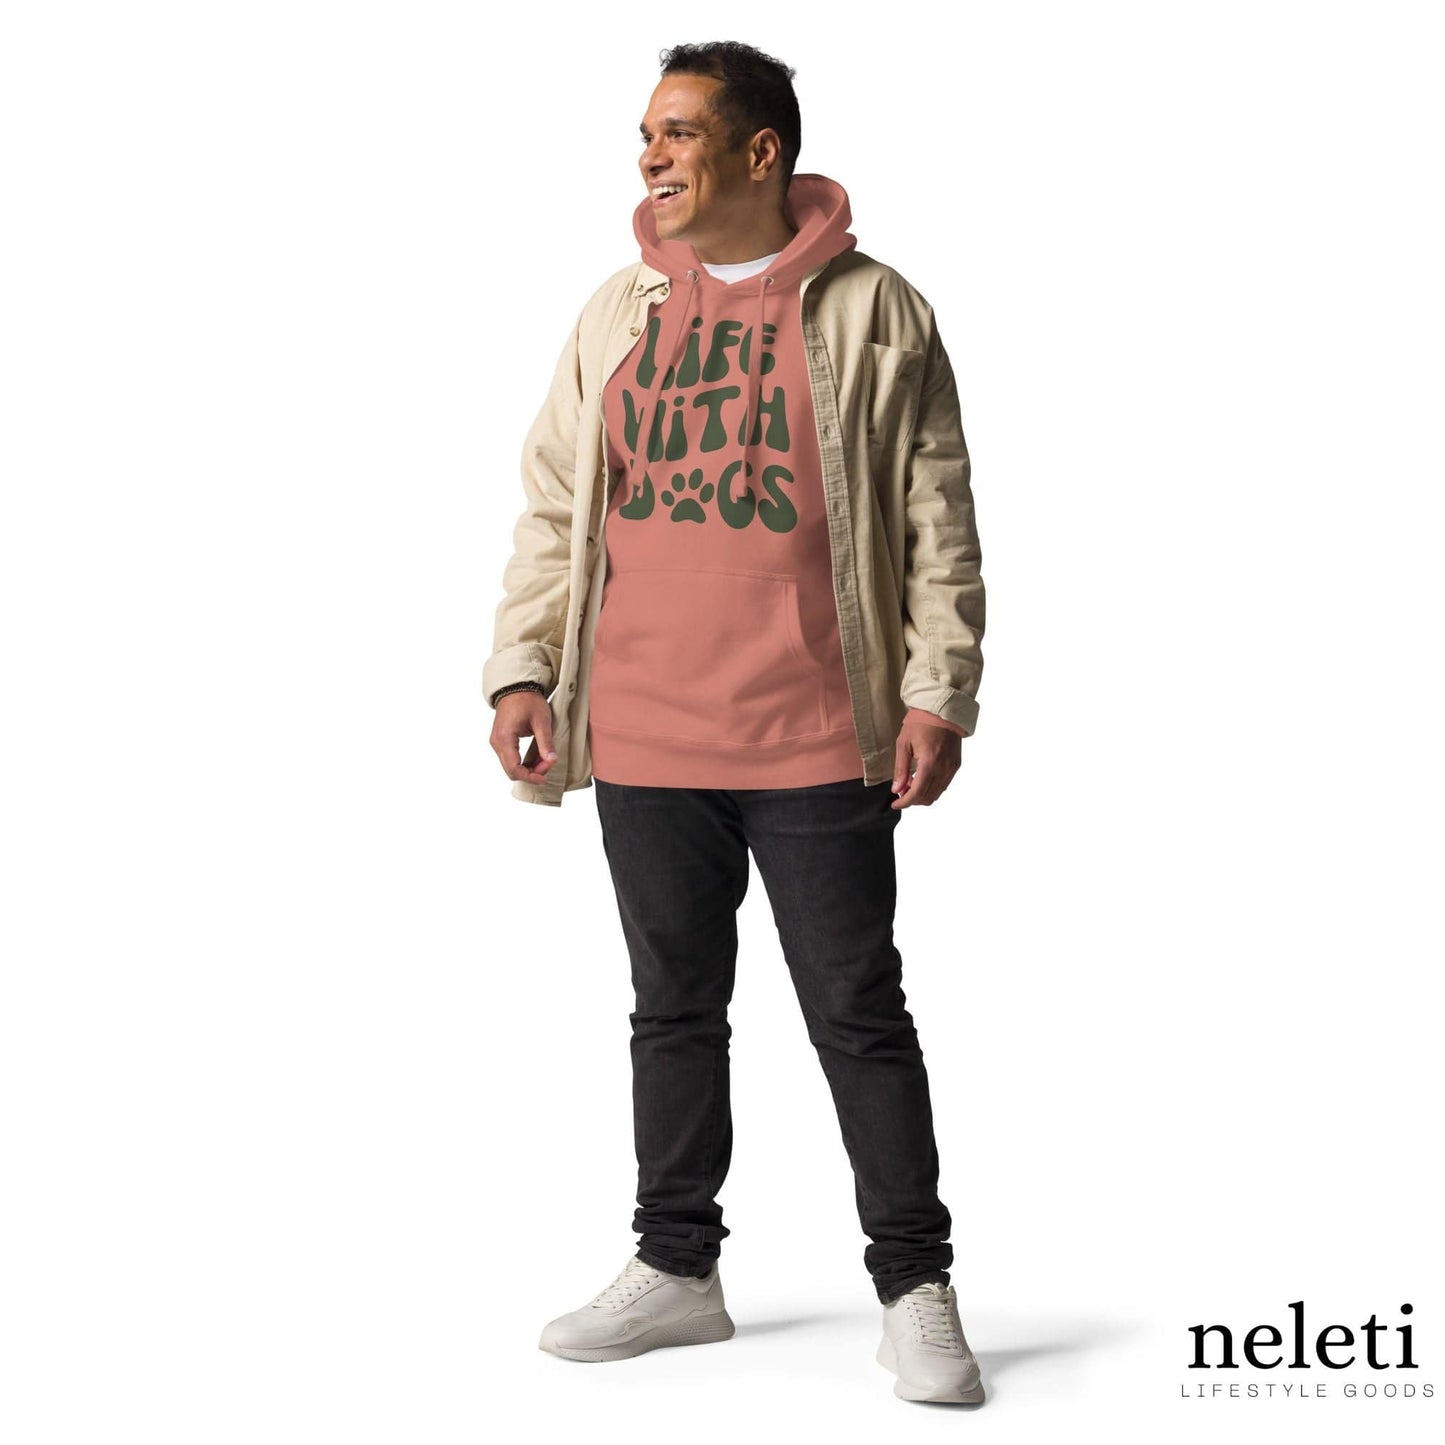    neleti.com-dog-owner-dusty-rose-hoodie